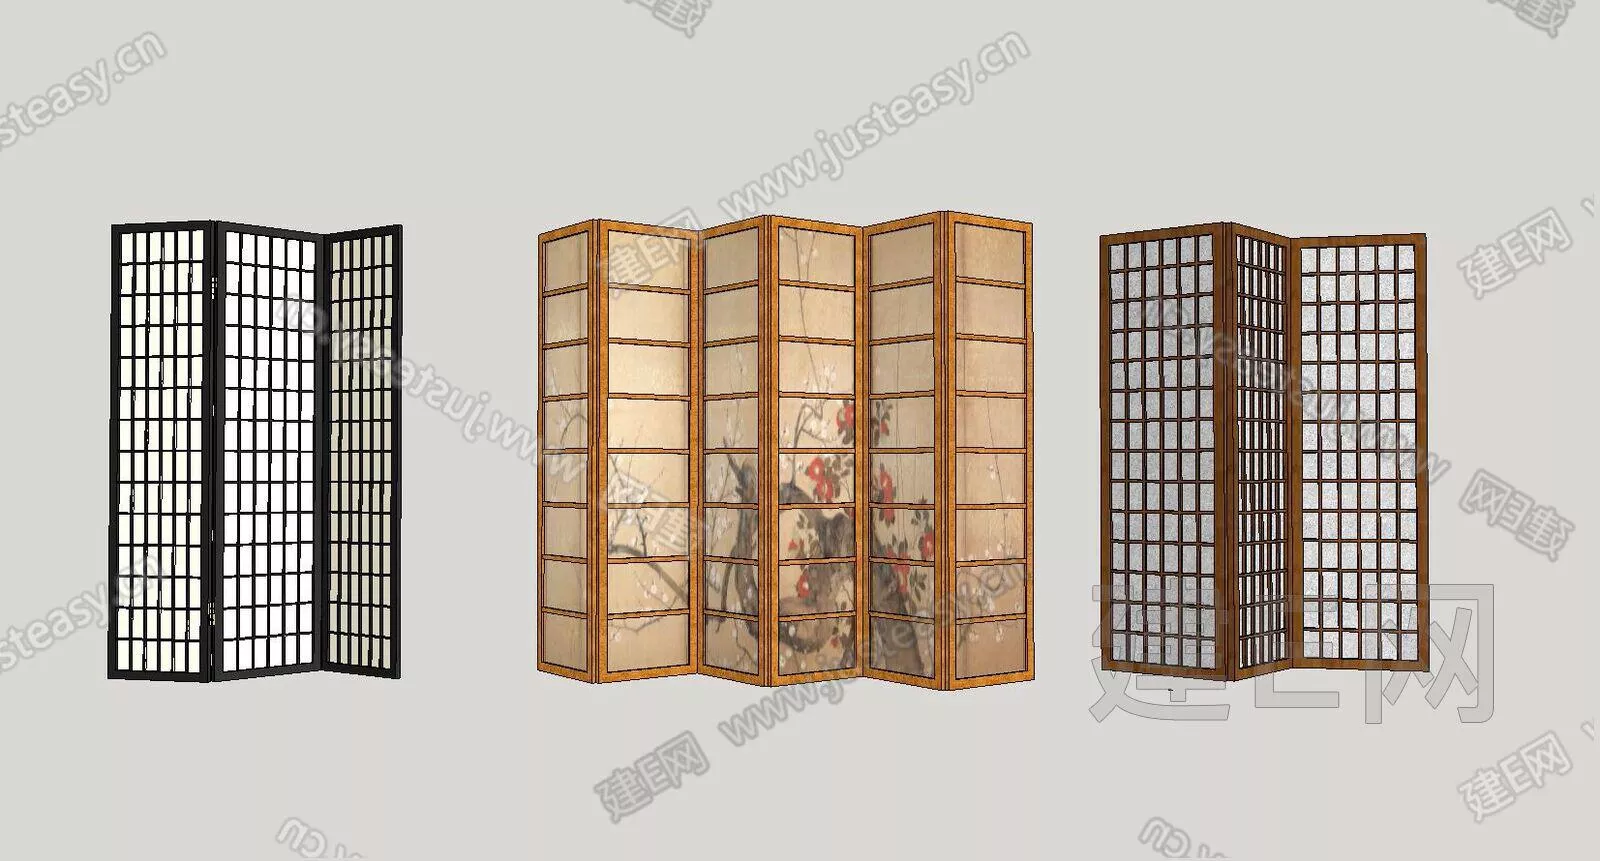 JAPANESE PARTITION SCREEN - SKETCHUP 3D MODEL - ENSCAPE - 105726125